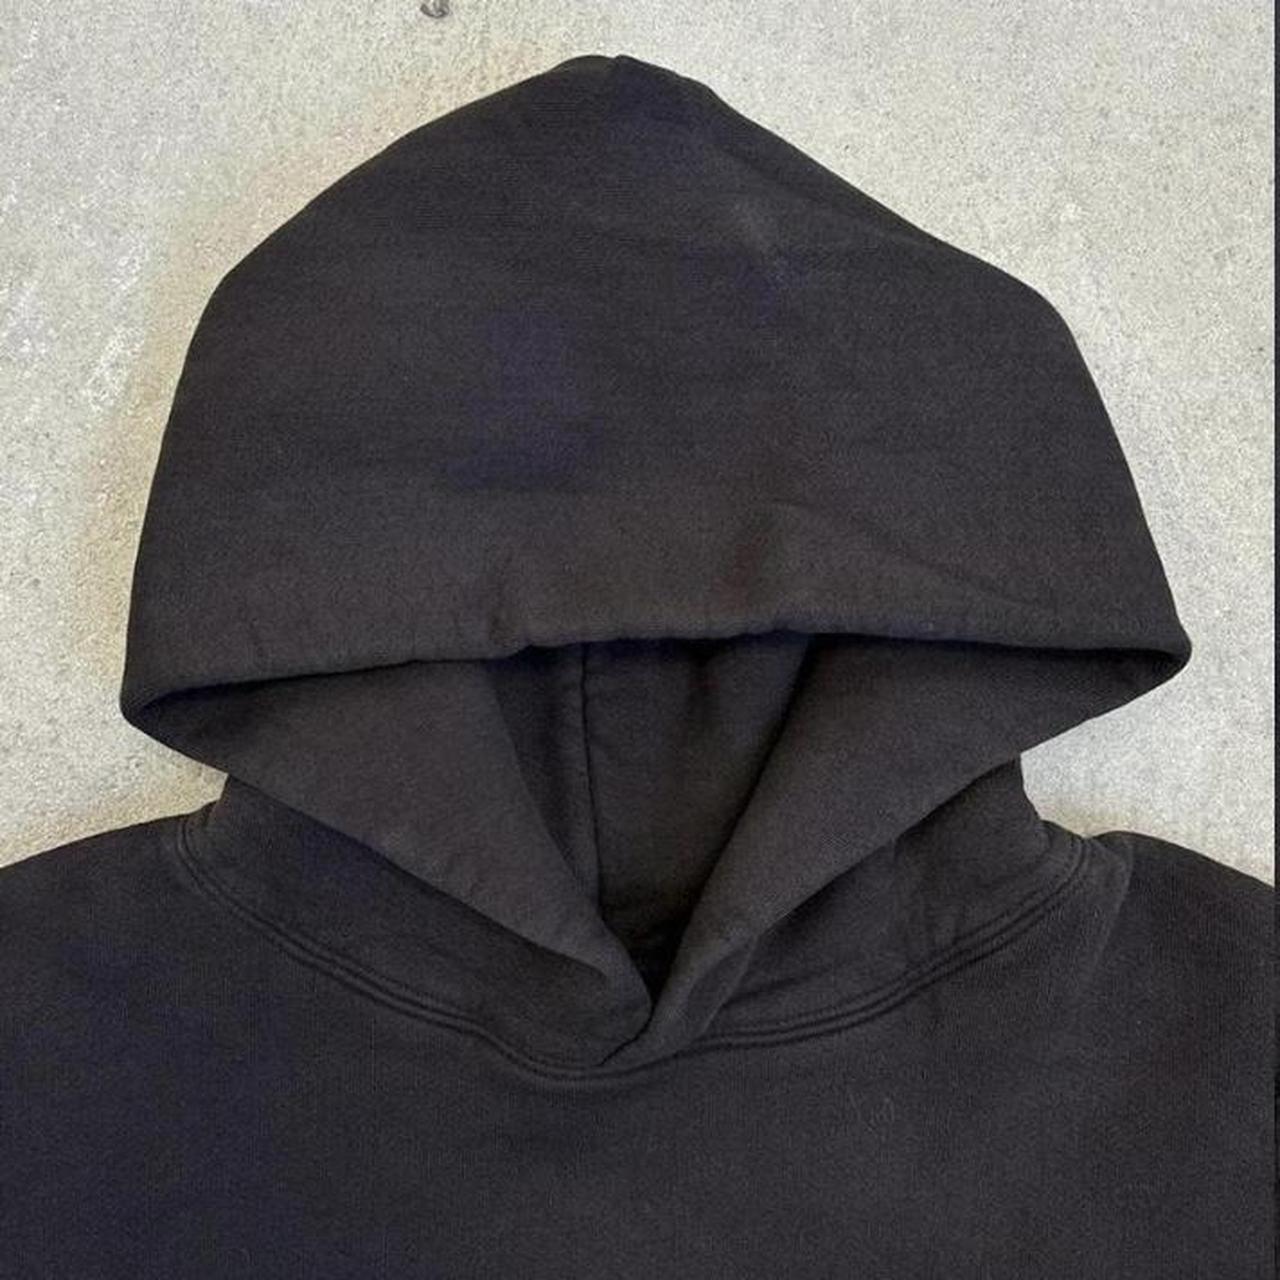 Yeezy x gap double layer perfect hoodie sample by LA... - Depop